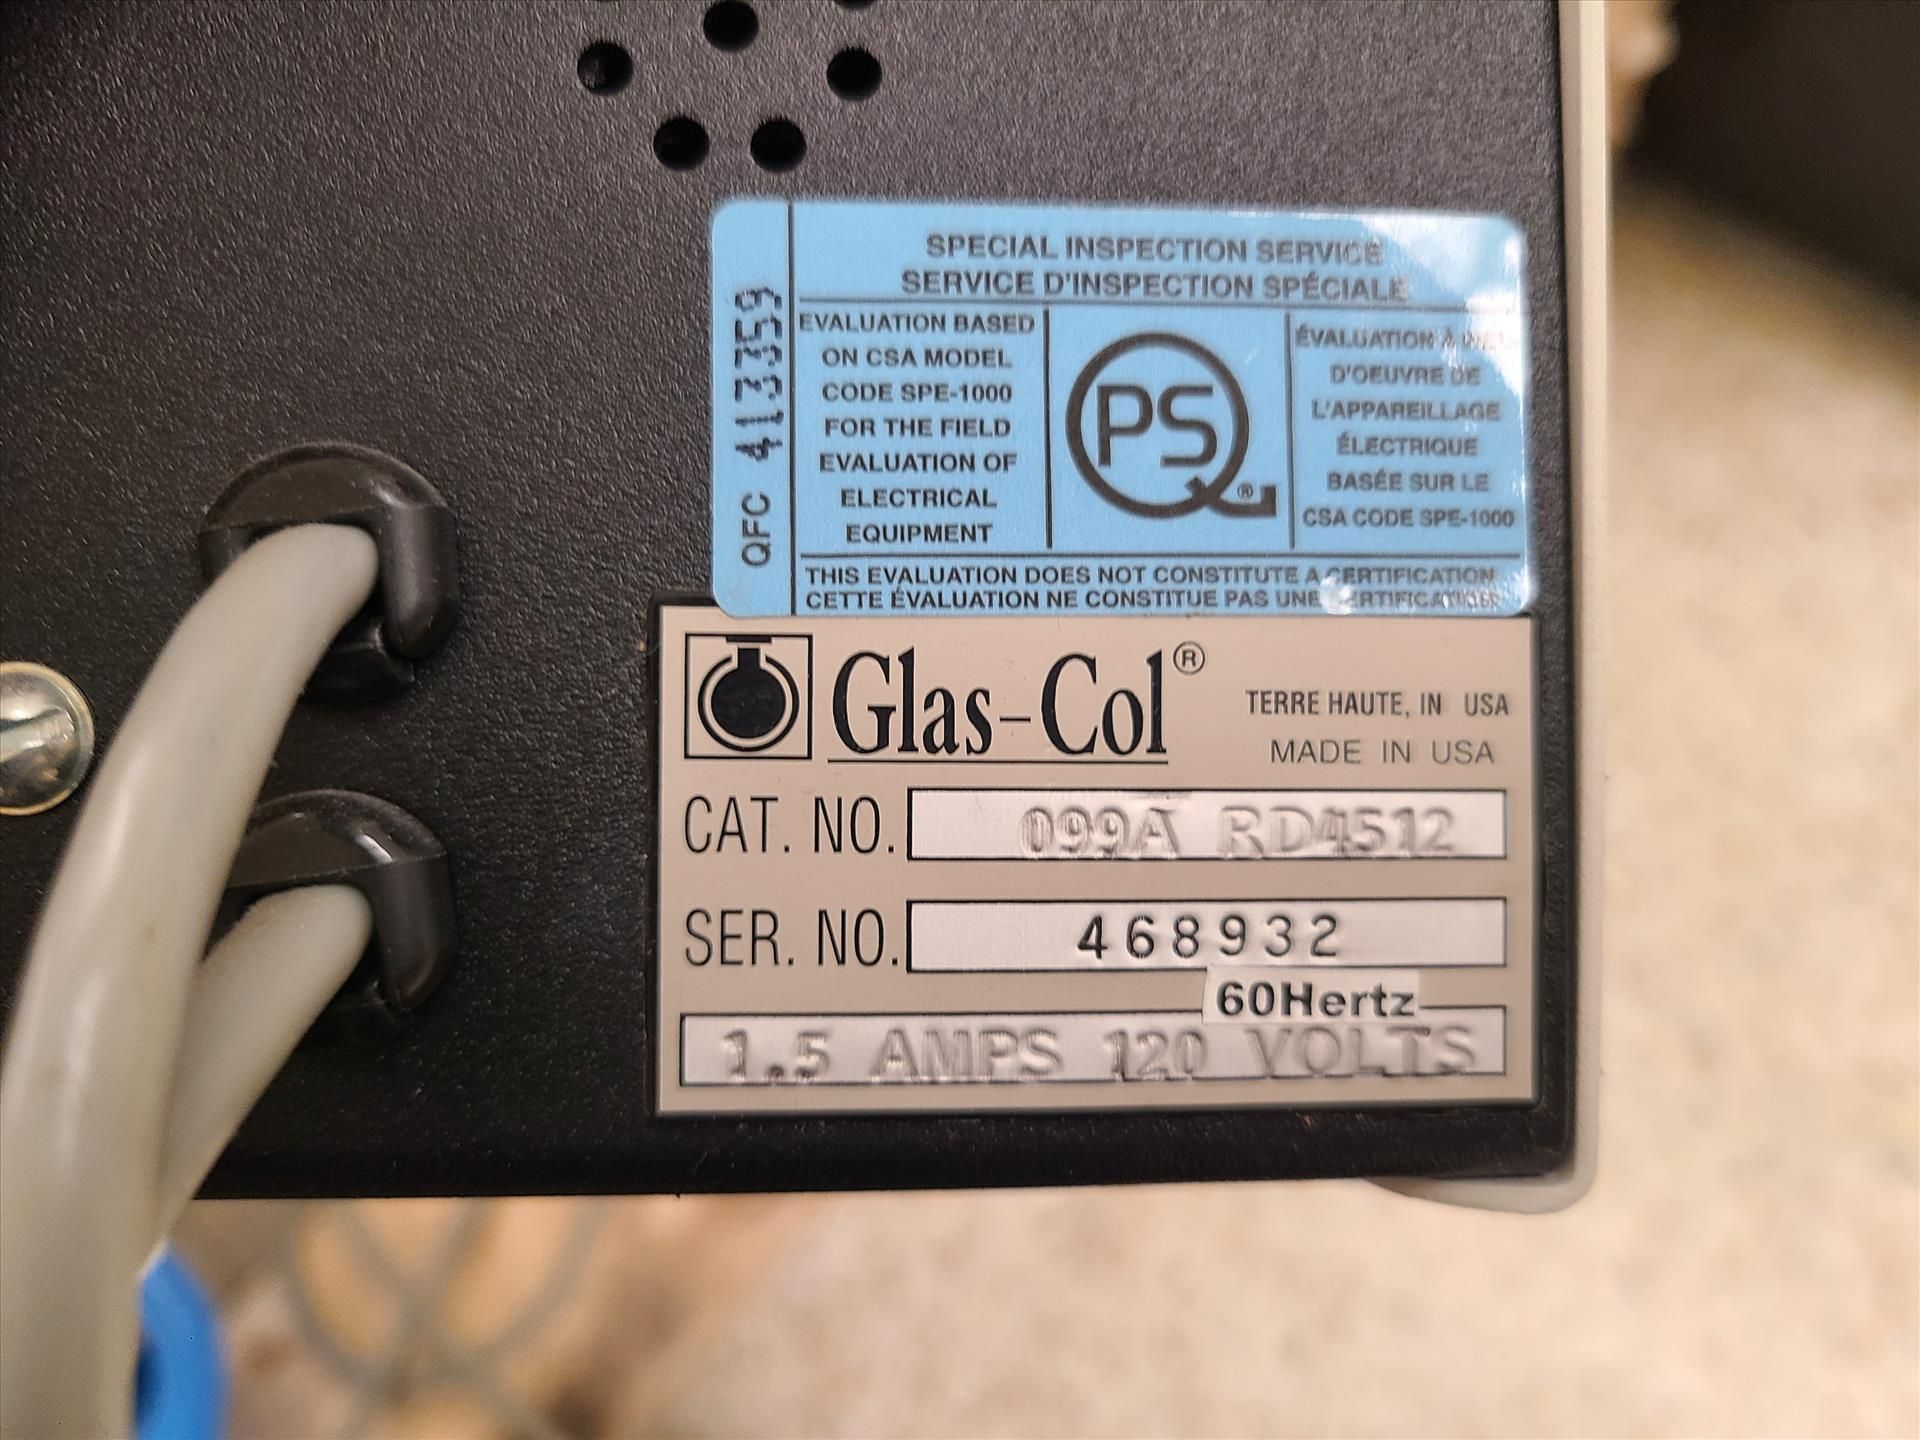 Glas-Col Tube Rotator, mod. 099A RD4512, ser. no. 468932, 120 volts, 60 Hz - Image 3 of 3